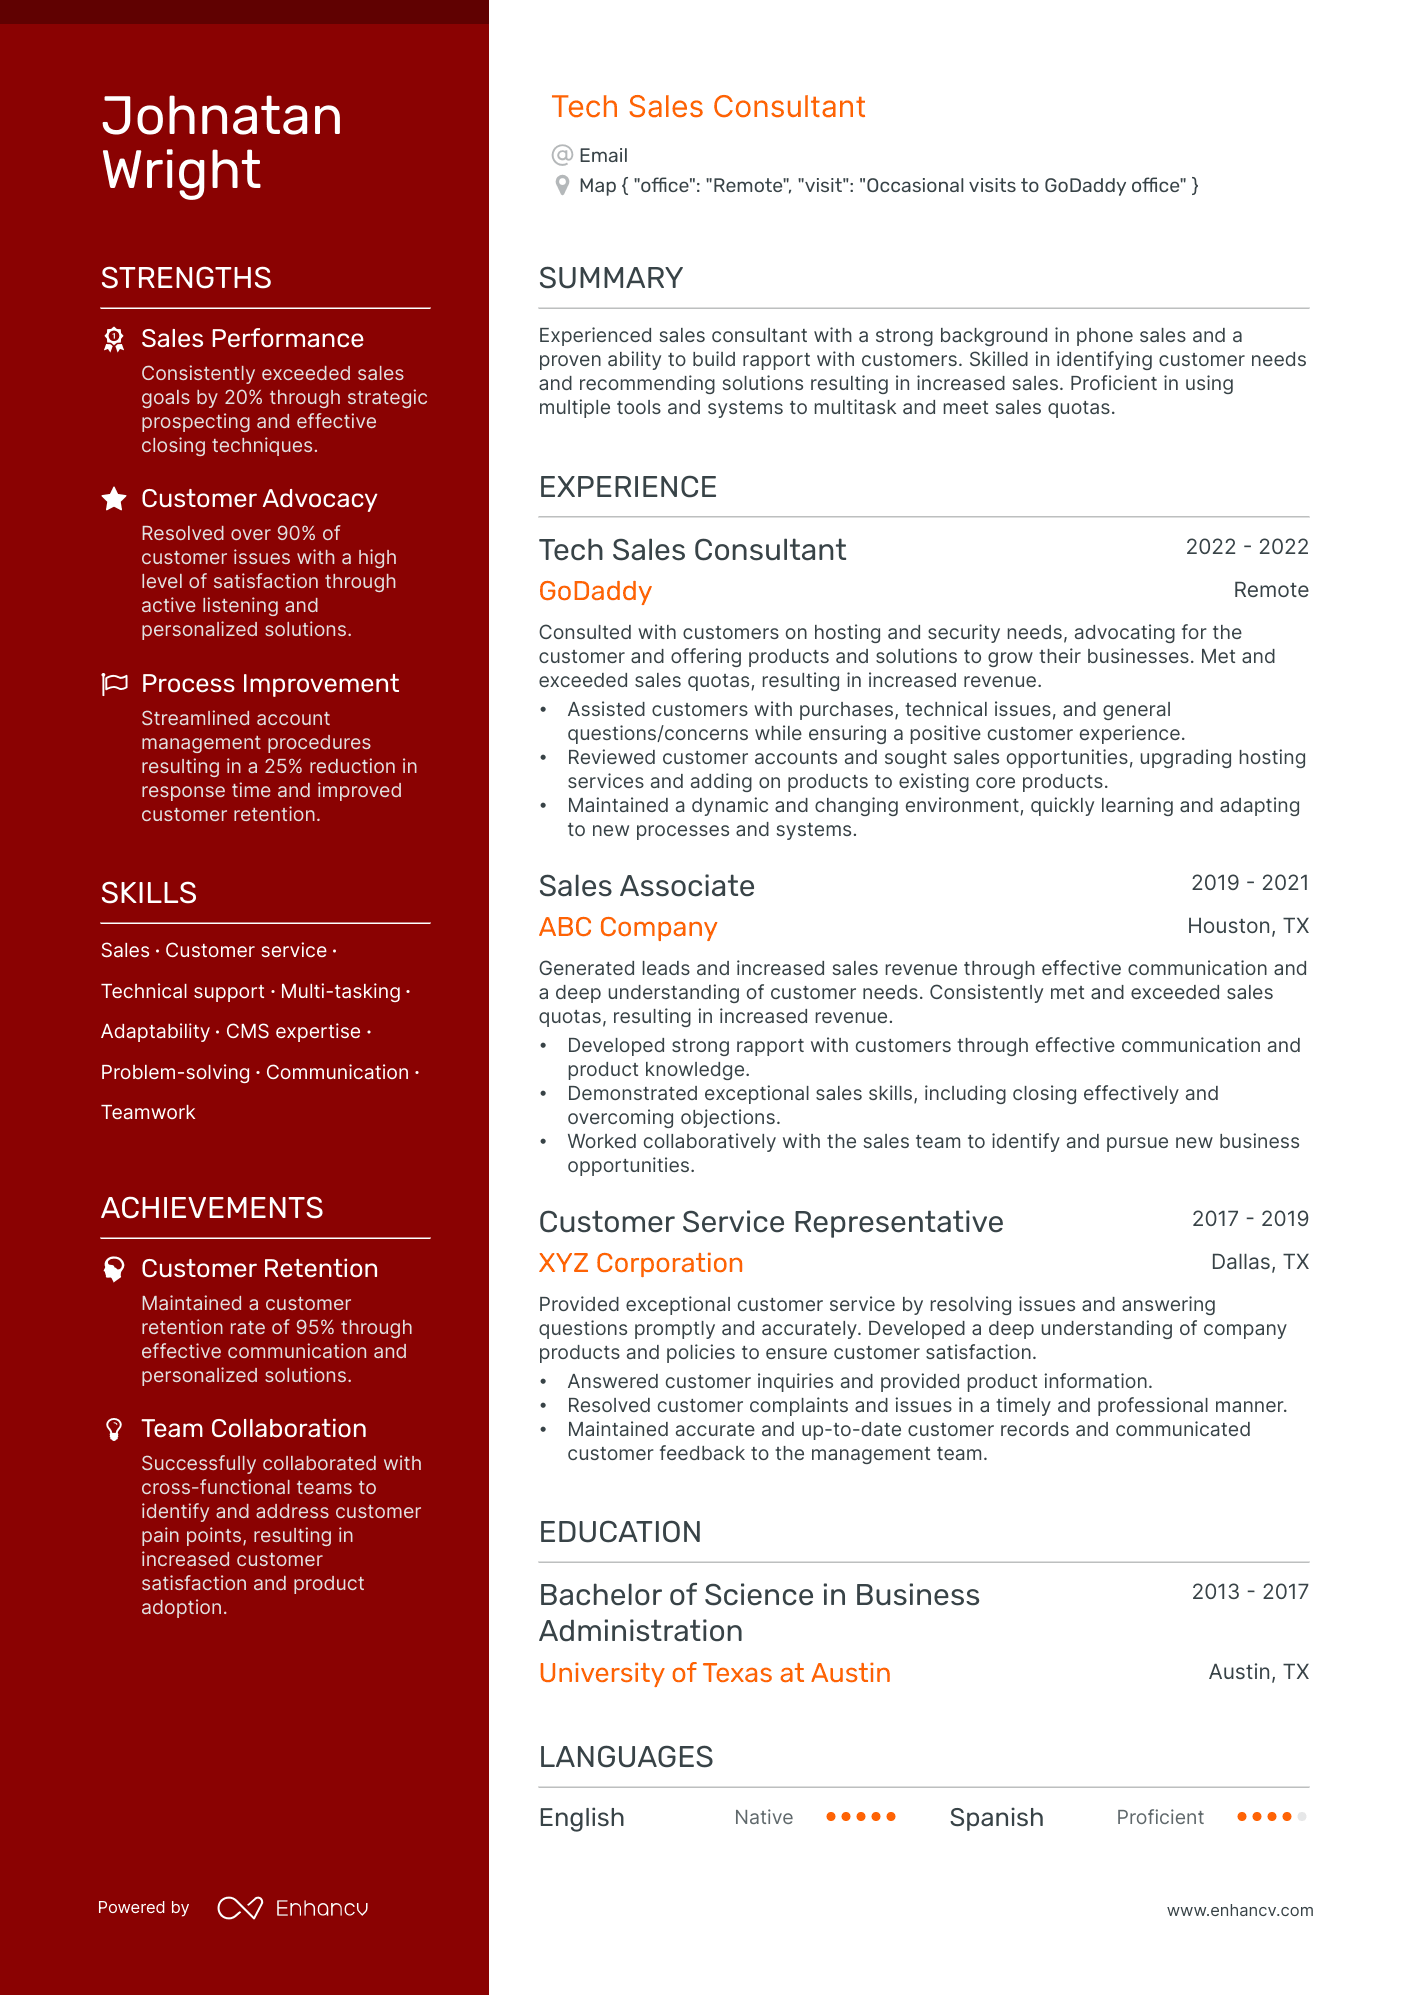 Tech Sales resume example